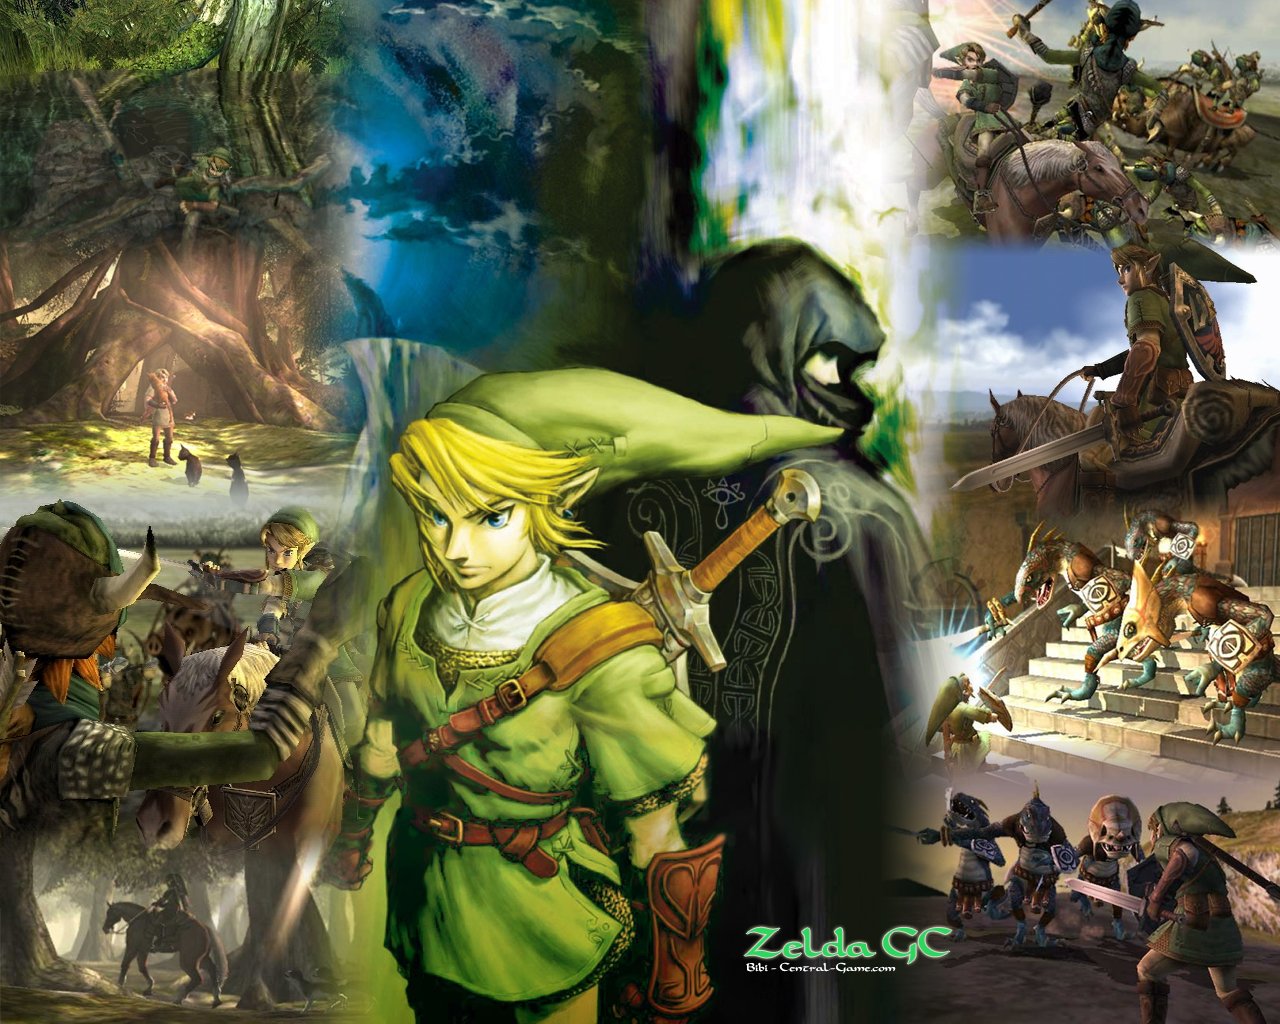 Princess The Legend Of Zelda Twilight